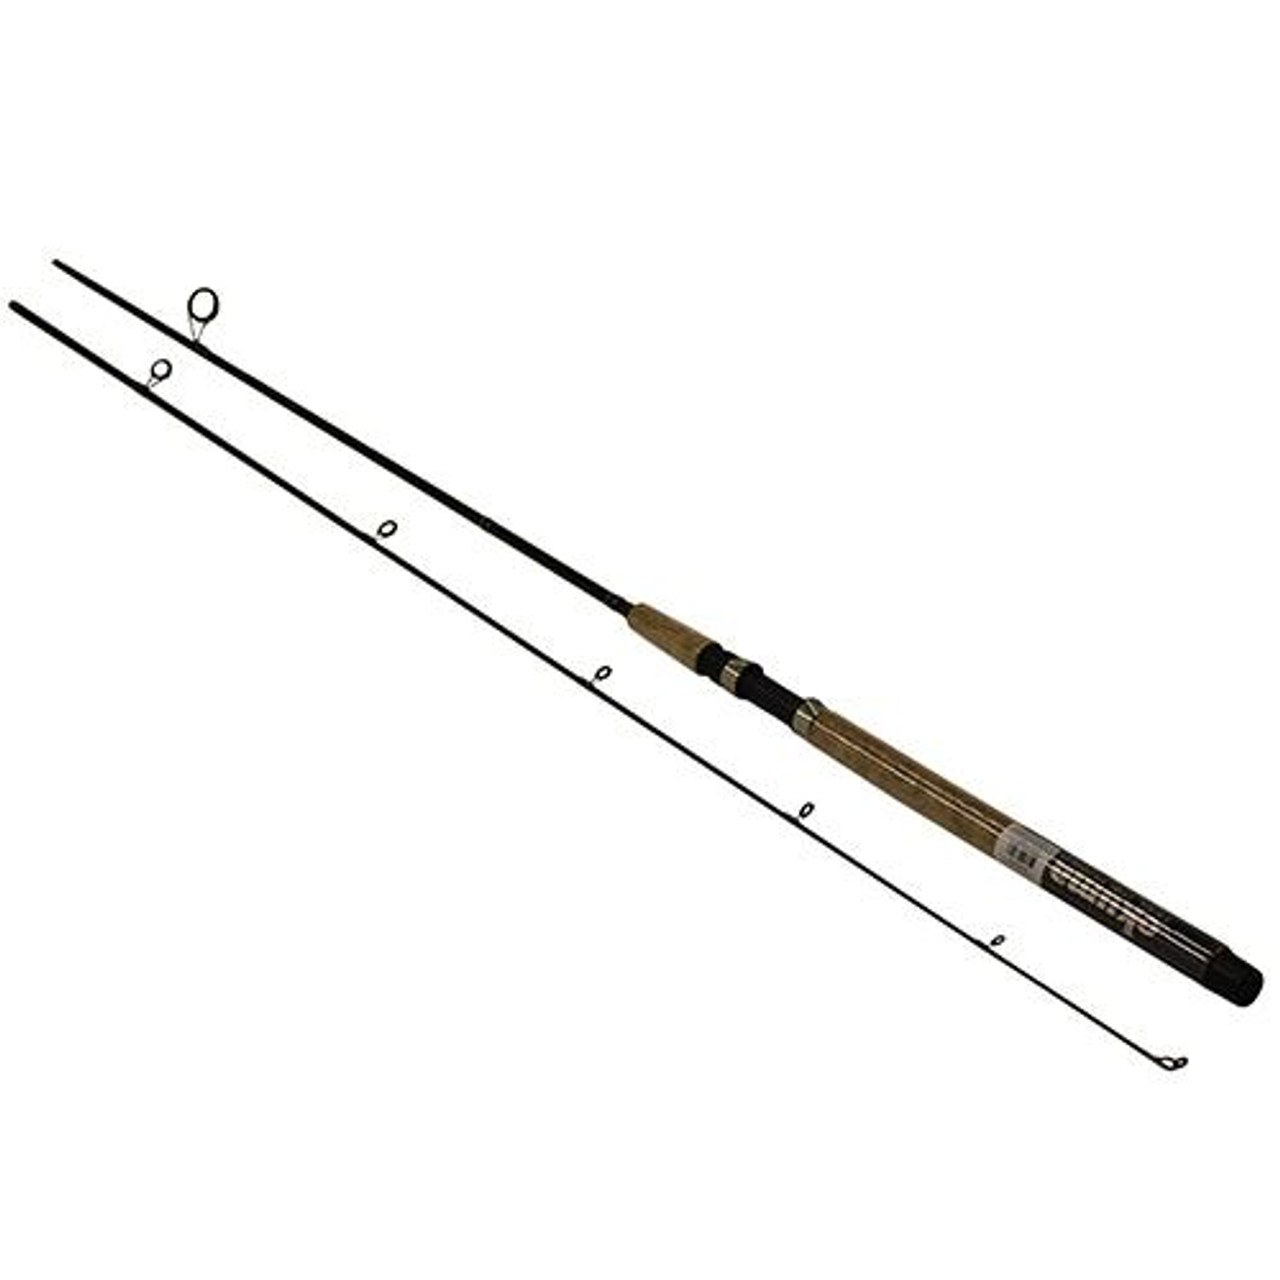 Okuma Celilo Spinning Rod 10 Length, 2 Piece Rod, Medium/Light